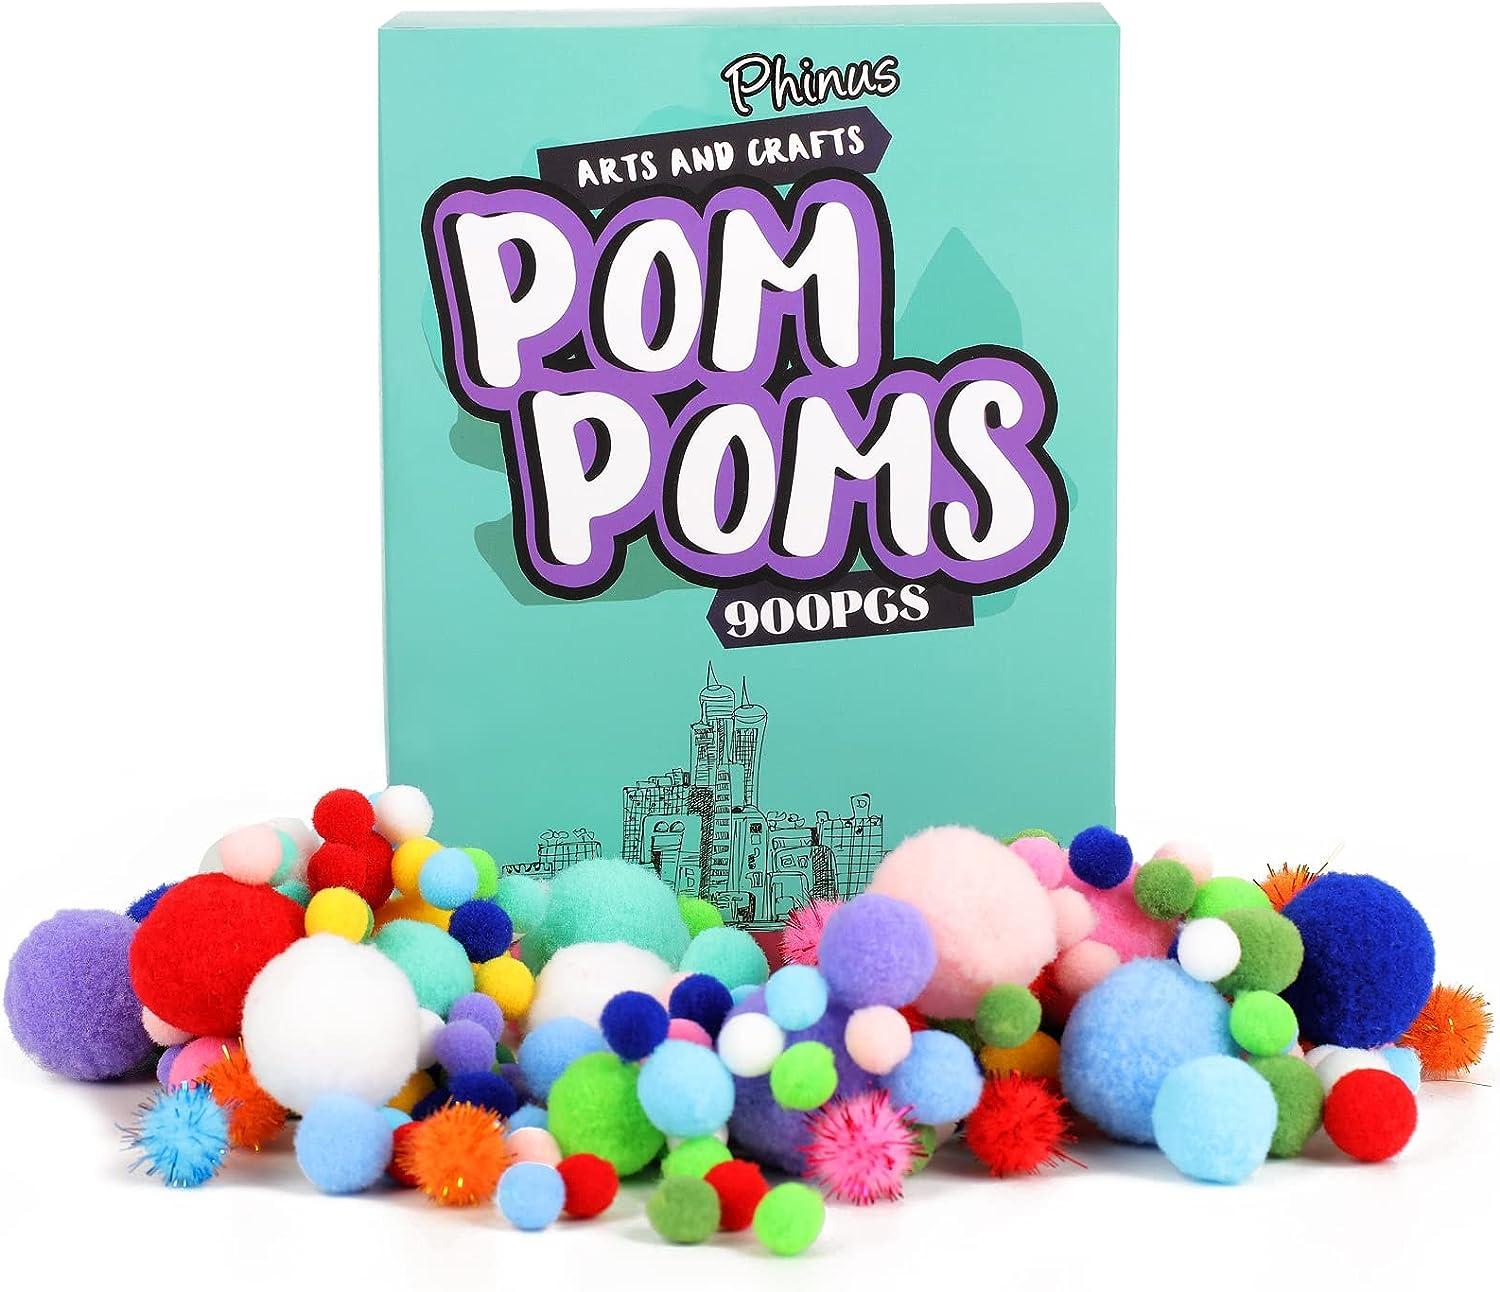 900 PCS Pom Poms Multicolor Bulk Pom Poms Arts and Crafts Soft and Fluffy  Craft Pom Poms Assorted Sizes Pompoms for Arts and Craft Making Decorations